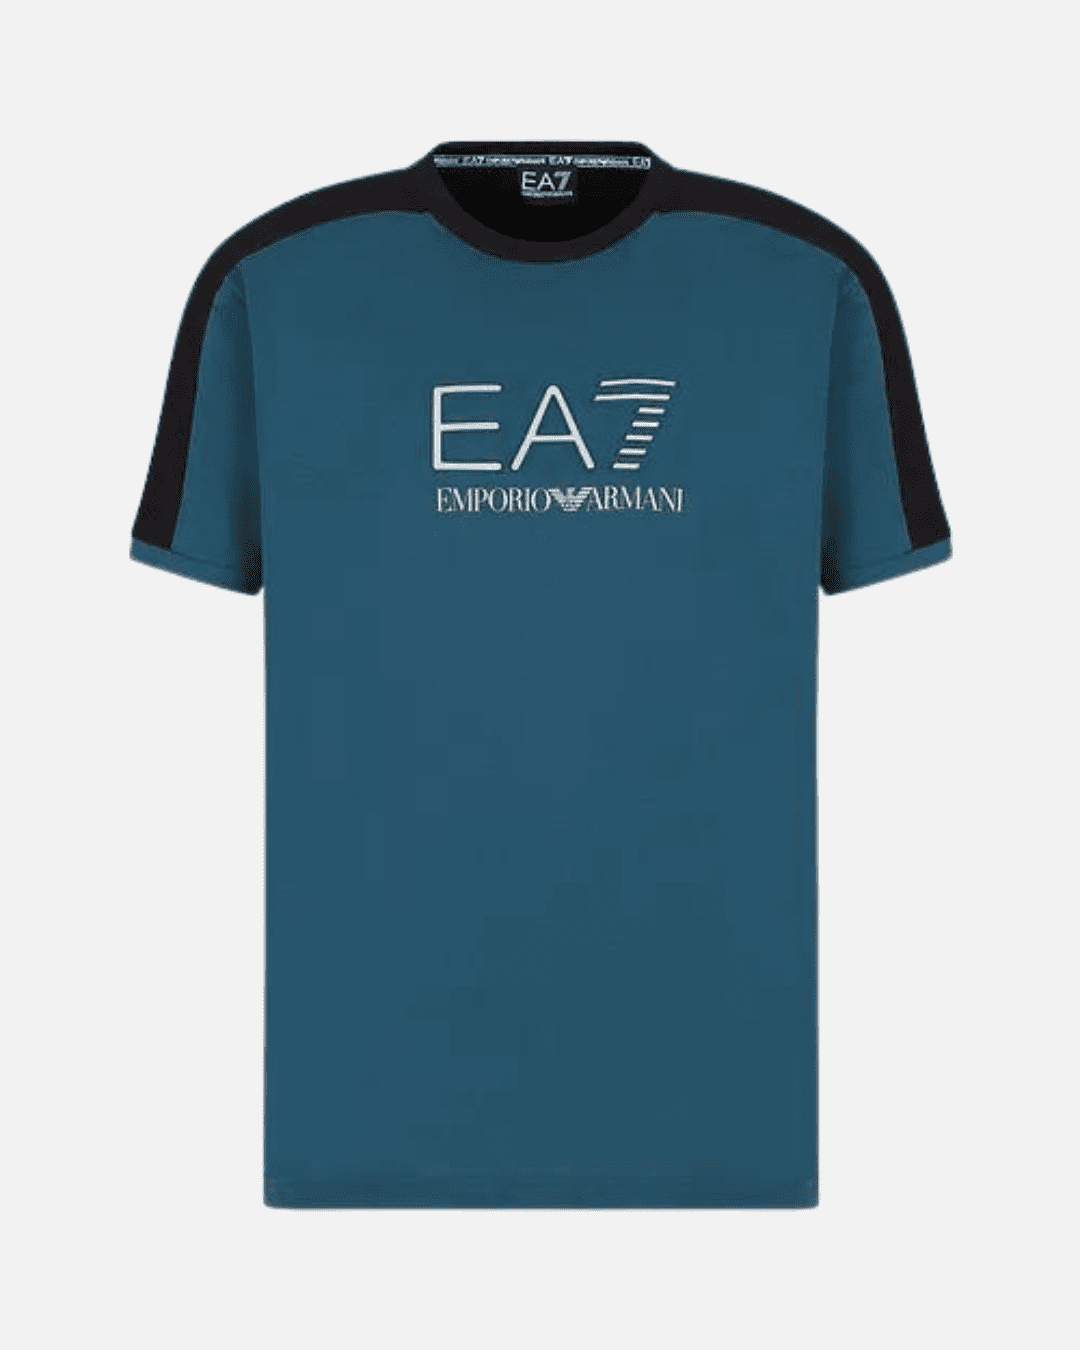 Emporio Armani Train Athletic T-shirt - Blue/Black